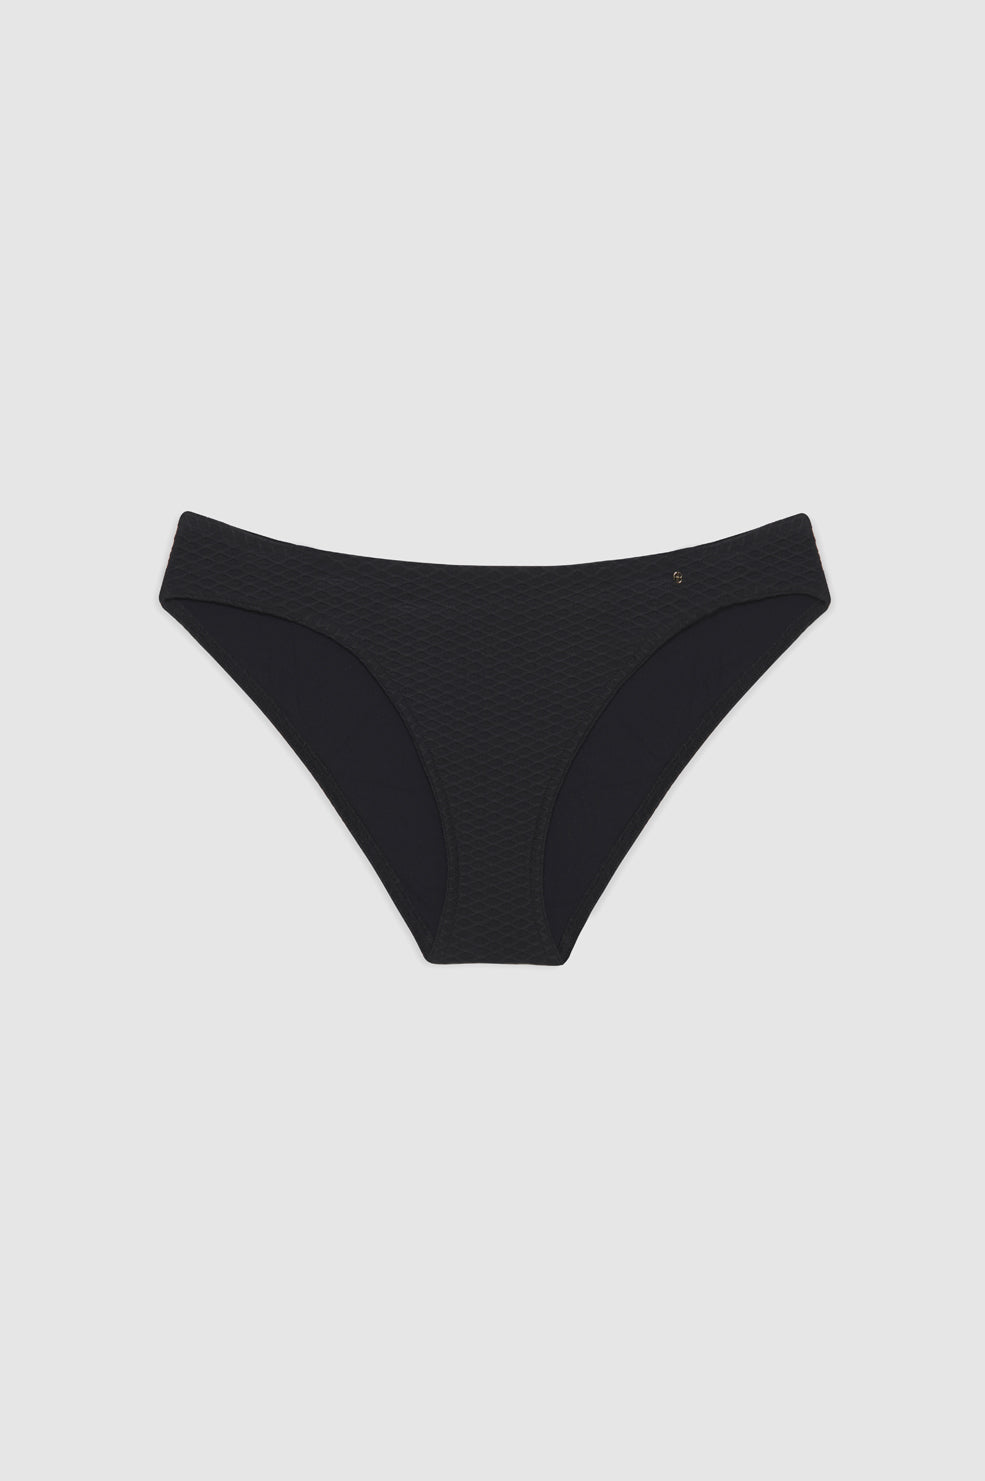 ANINE BING Riza Bikini Bottom - Black - Front View